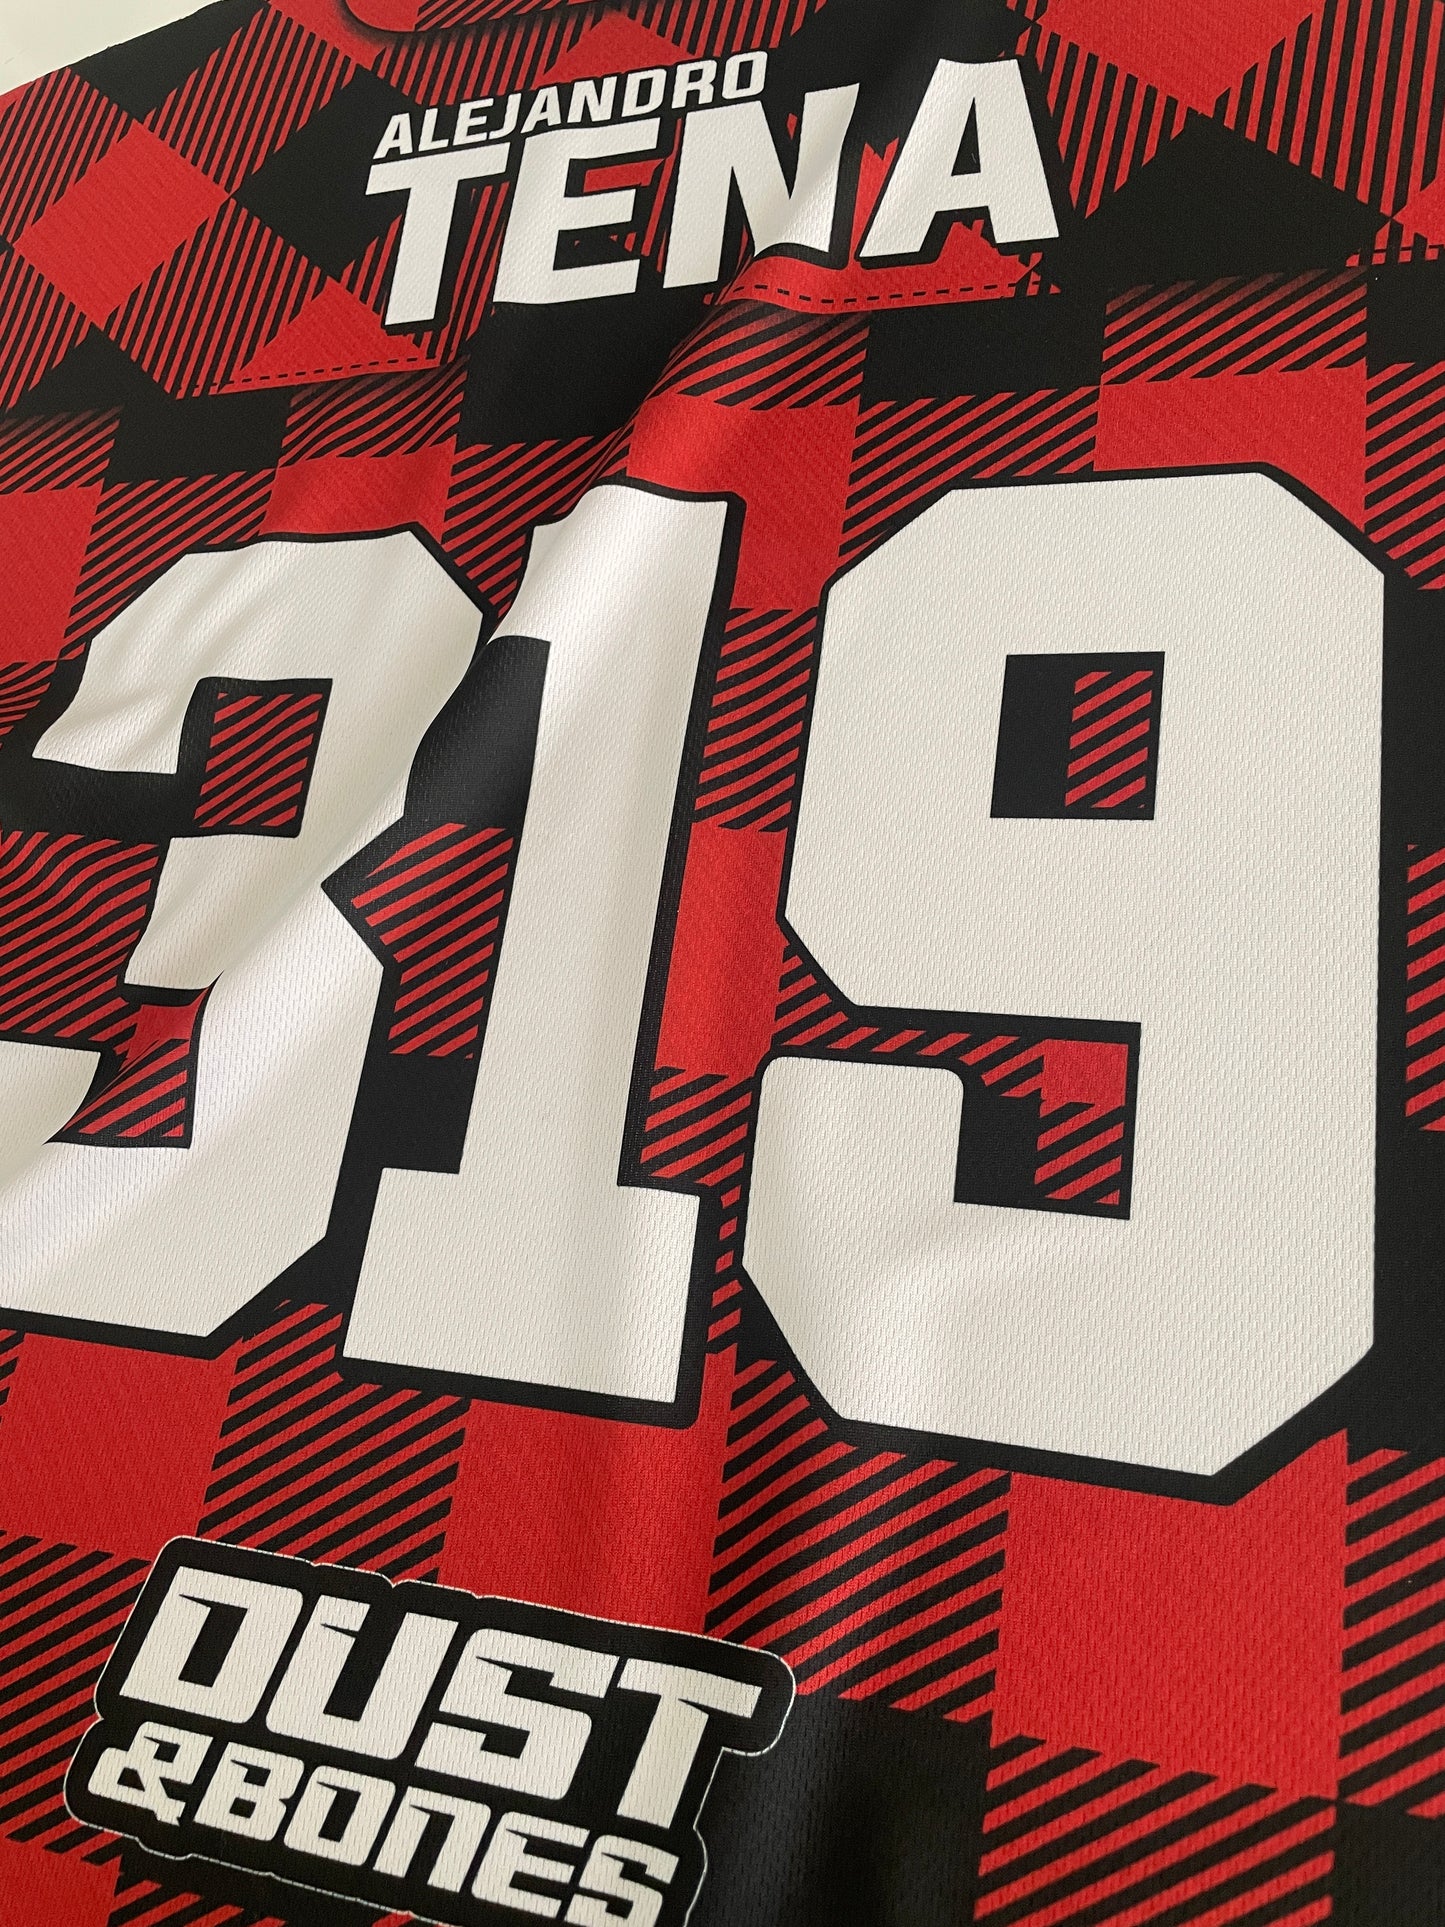 Camiseta Motocross | Redneck - Blaze Orange | Mx Jersey Enduro tipo Camisa Cuadros